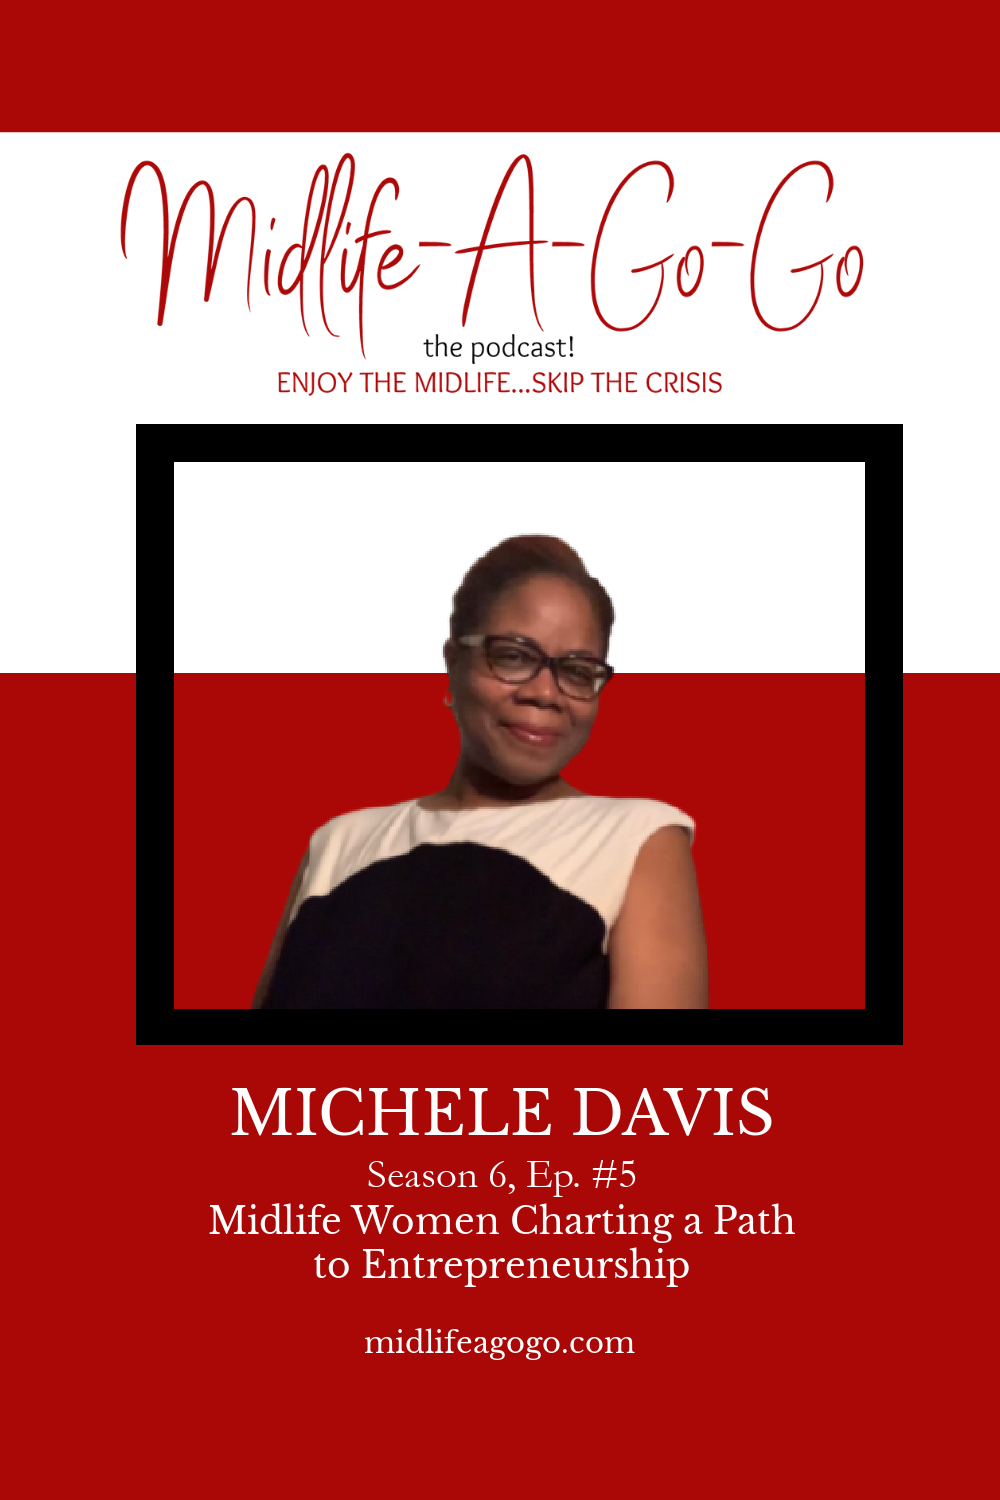 Midlife Women Charting a Path to Entrepreneurship with Michele Davis